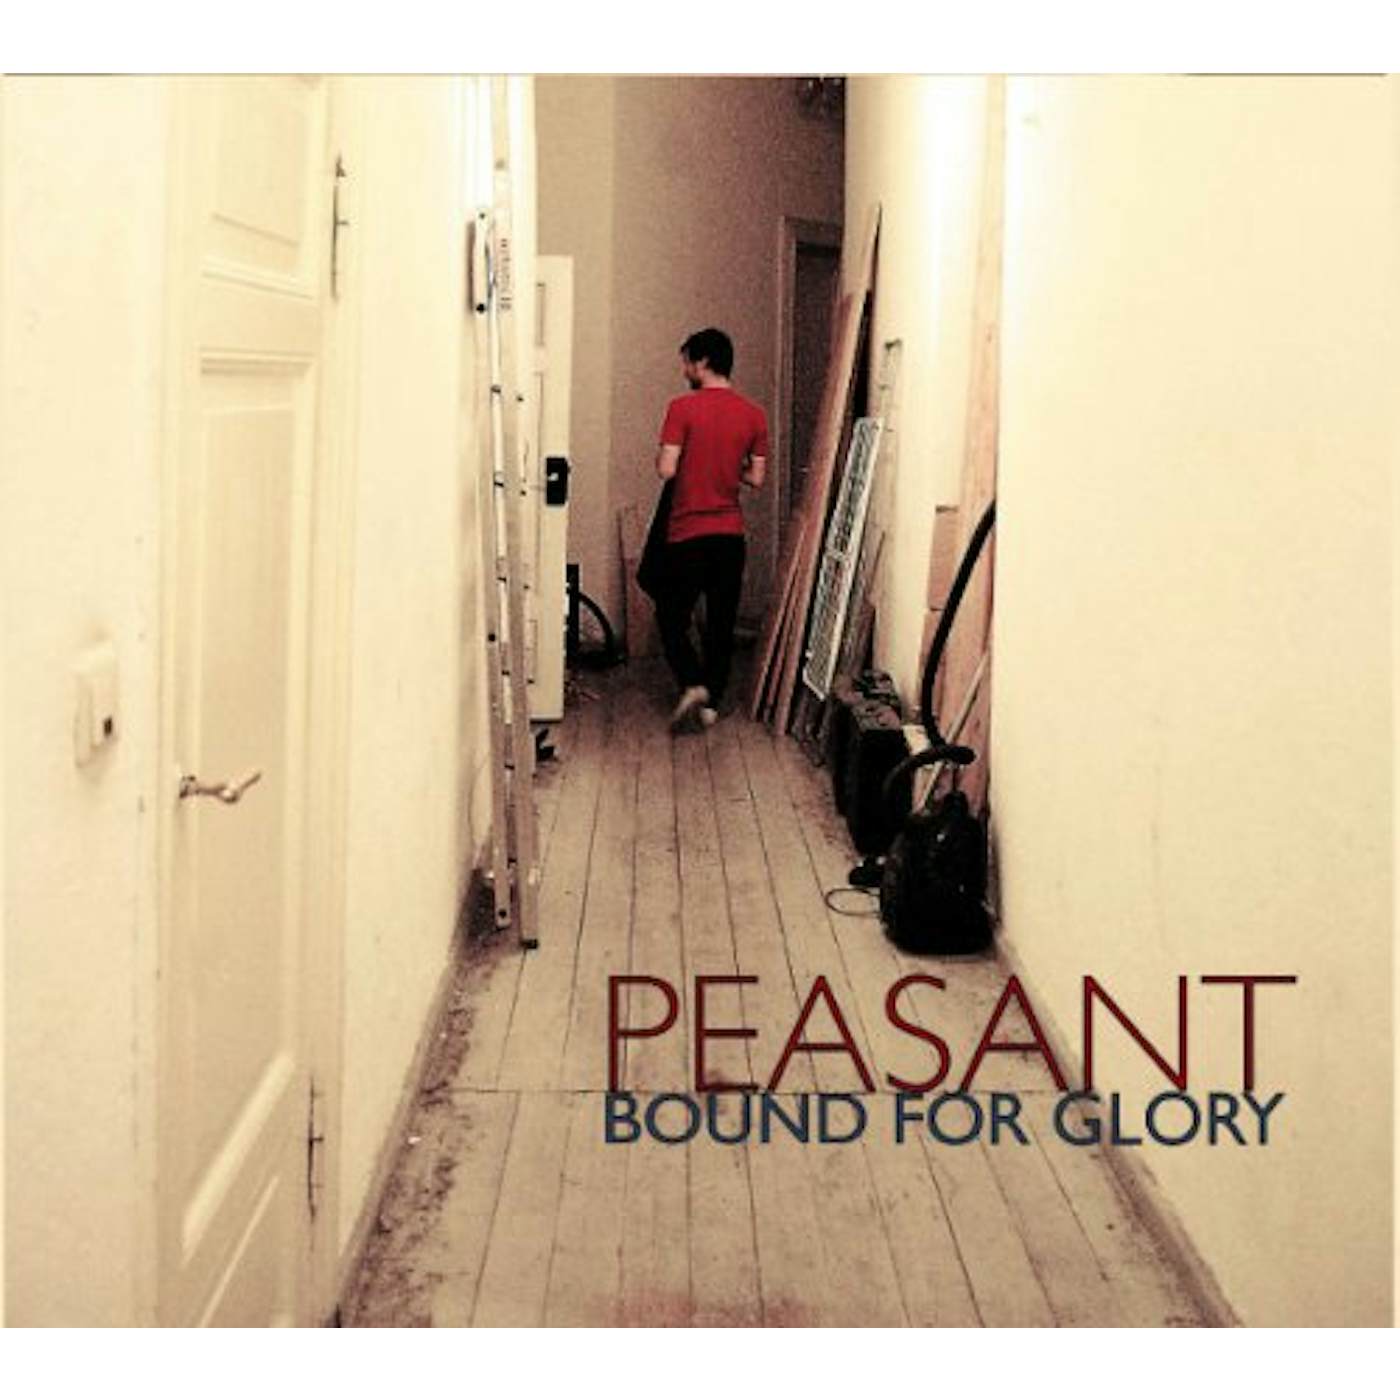 Peasant Bound for Glory Vinyl Record